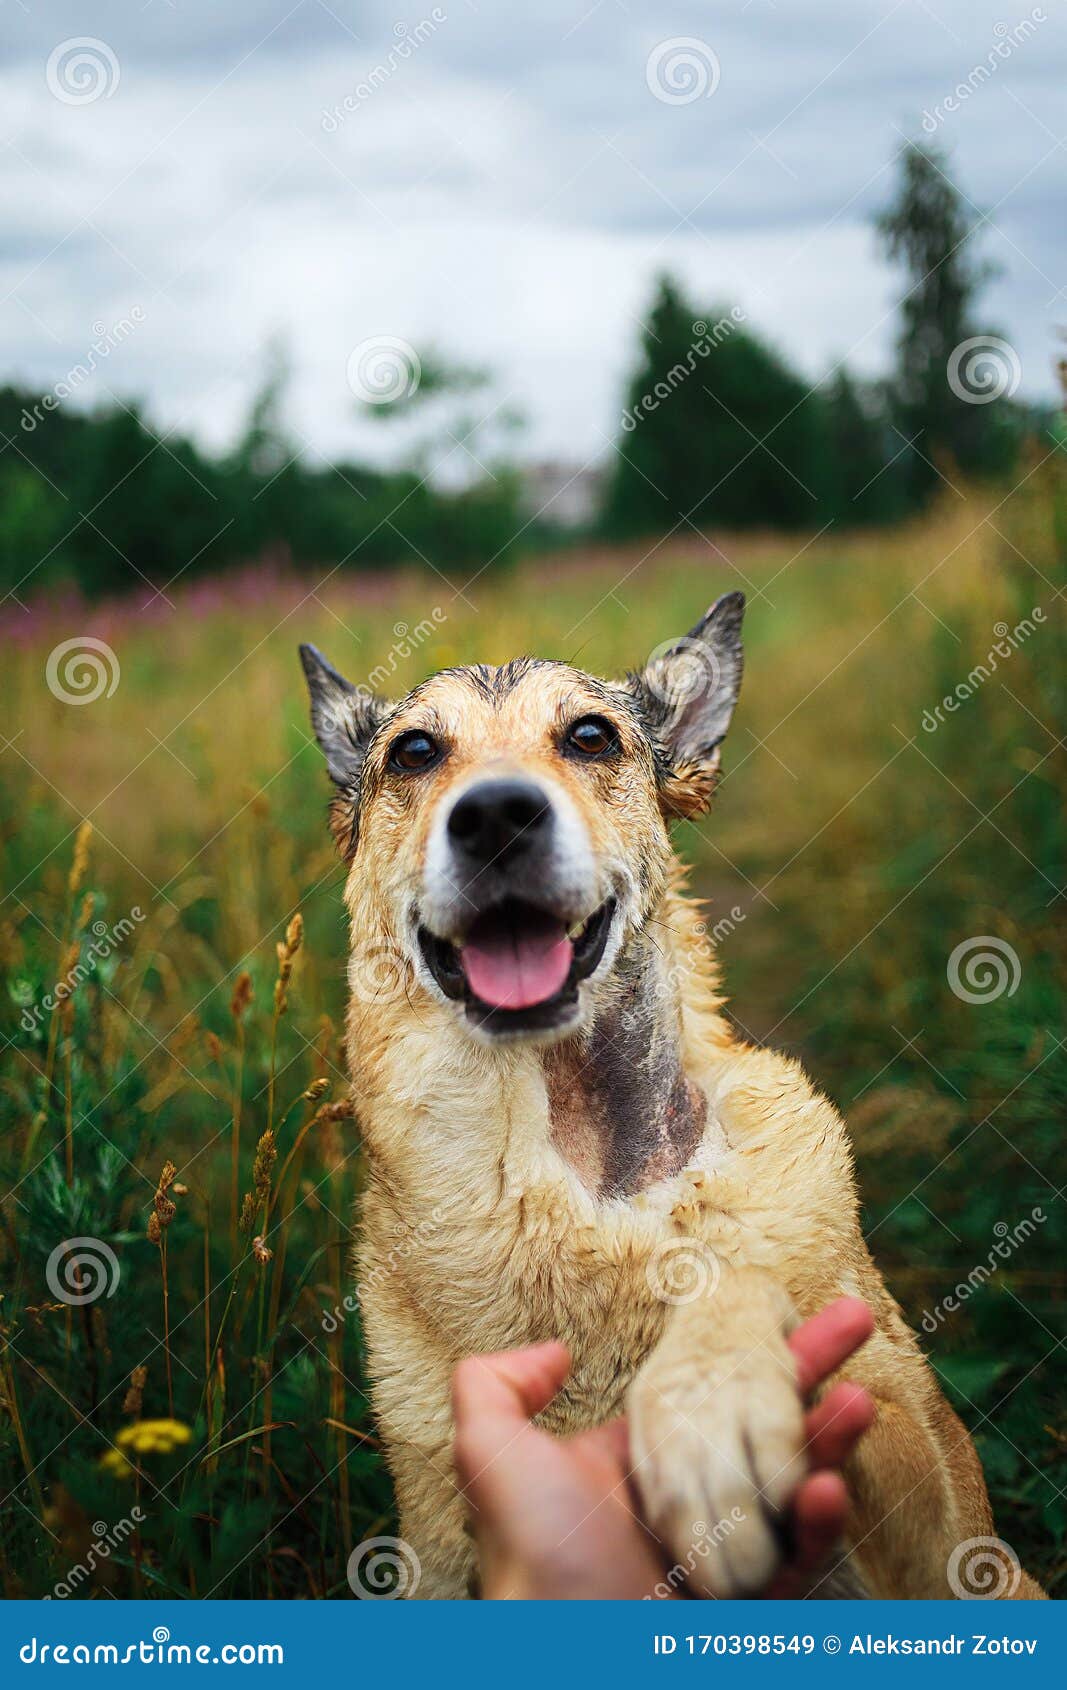 the happy dog paw